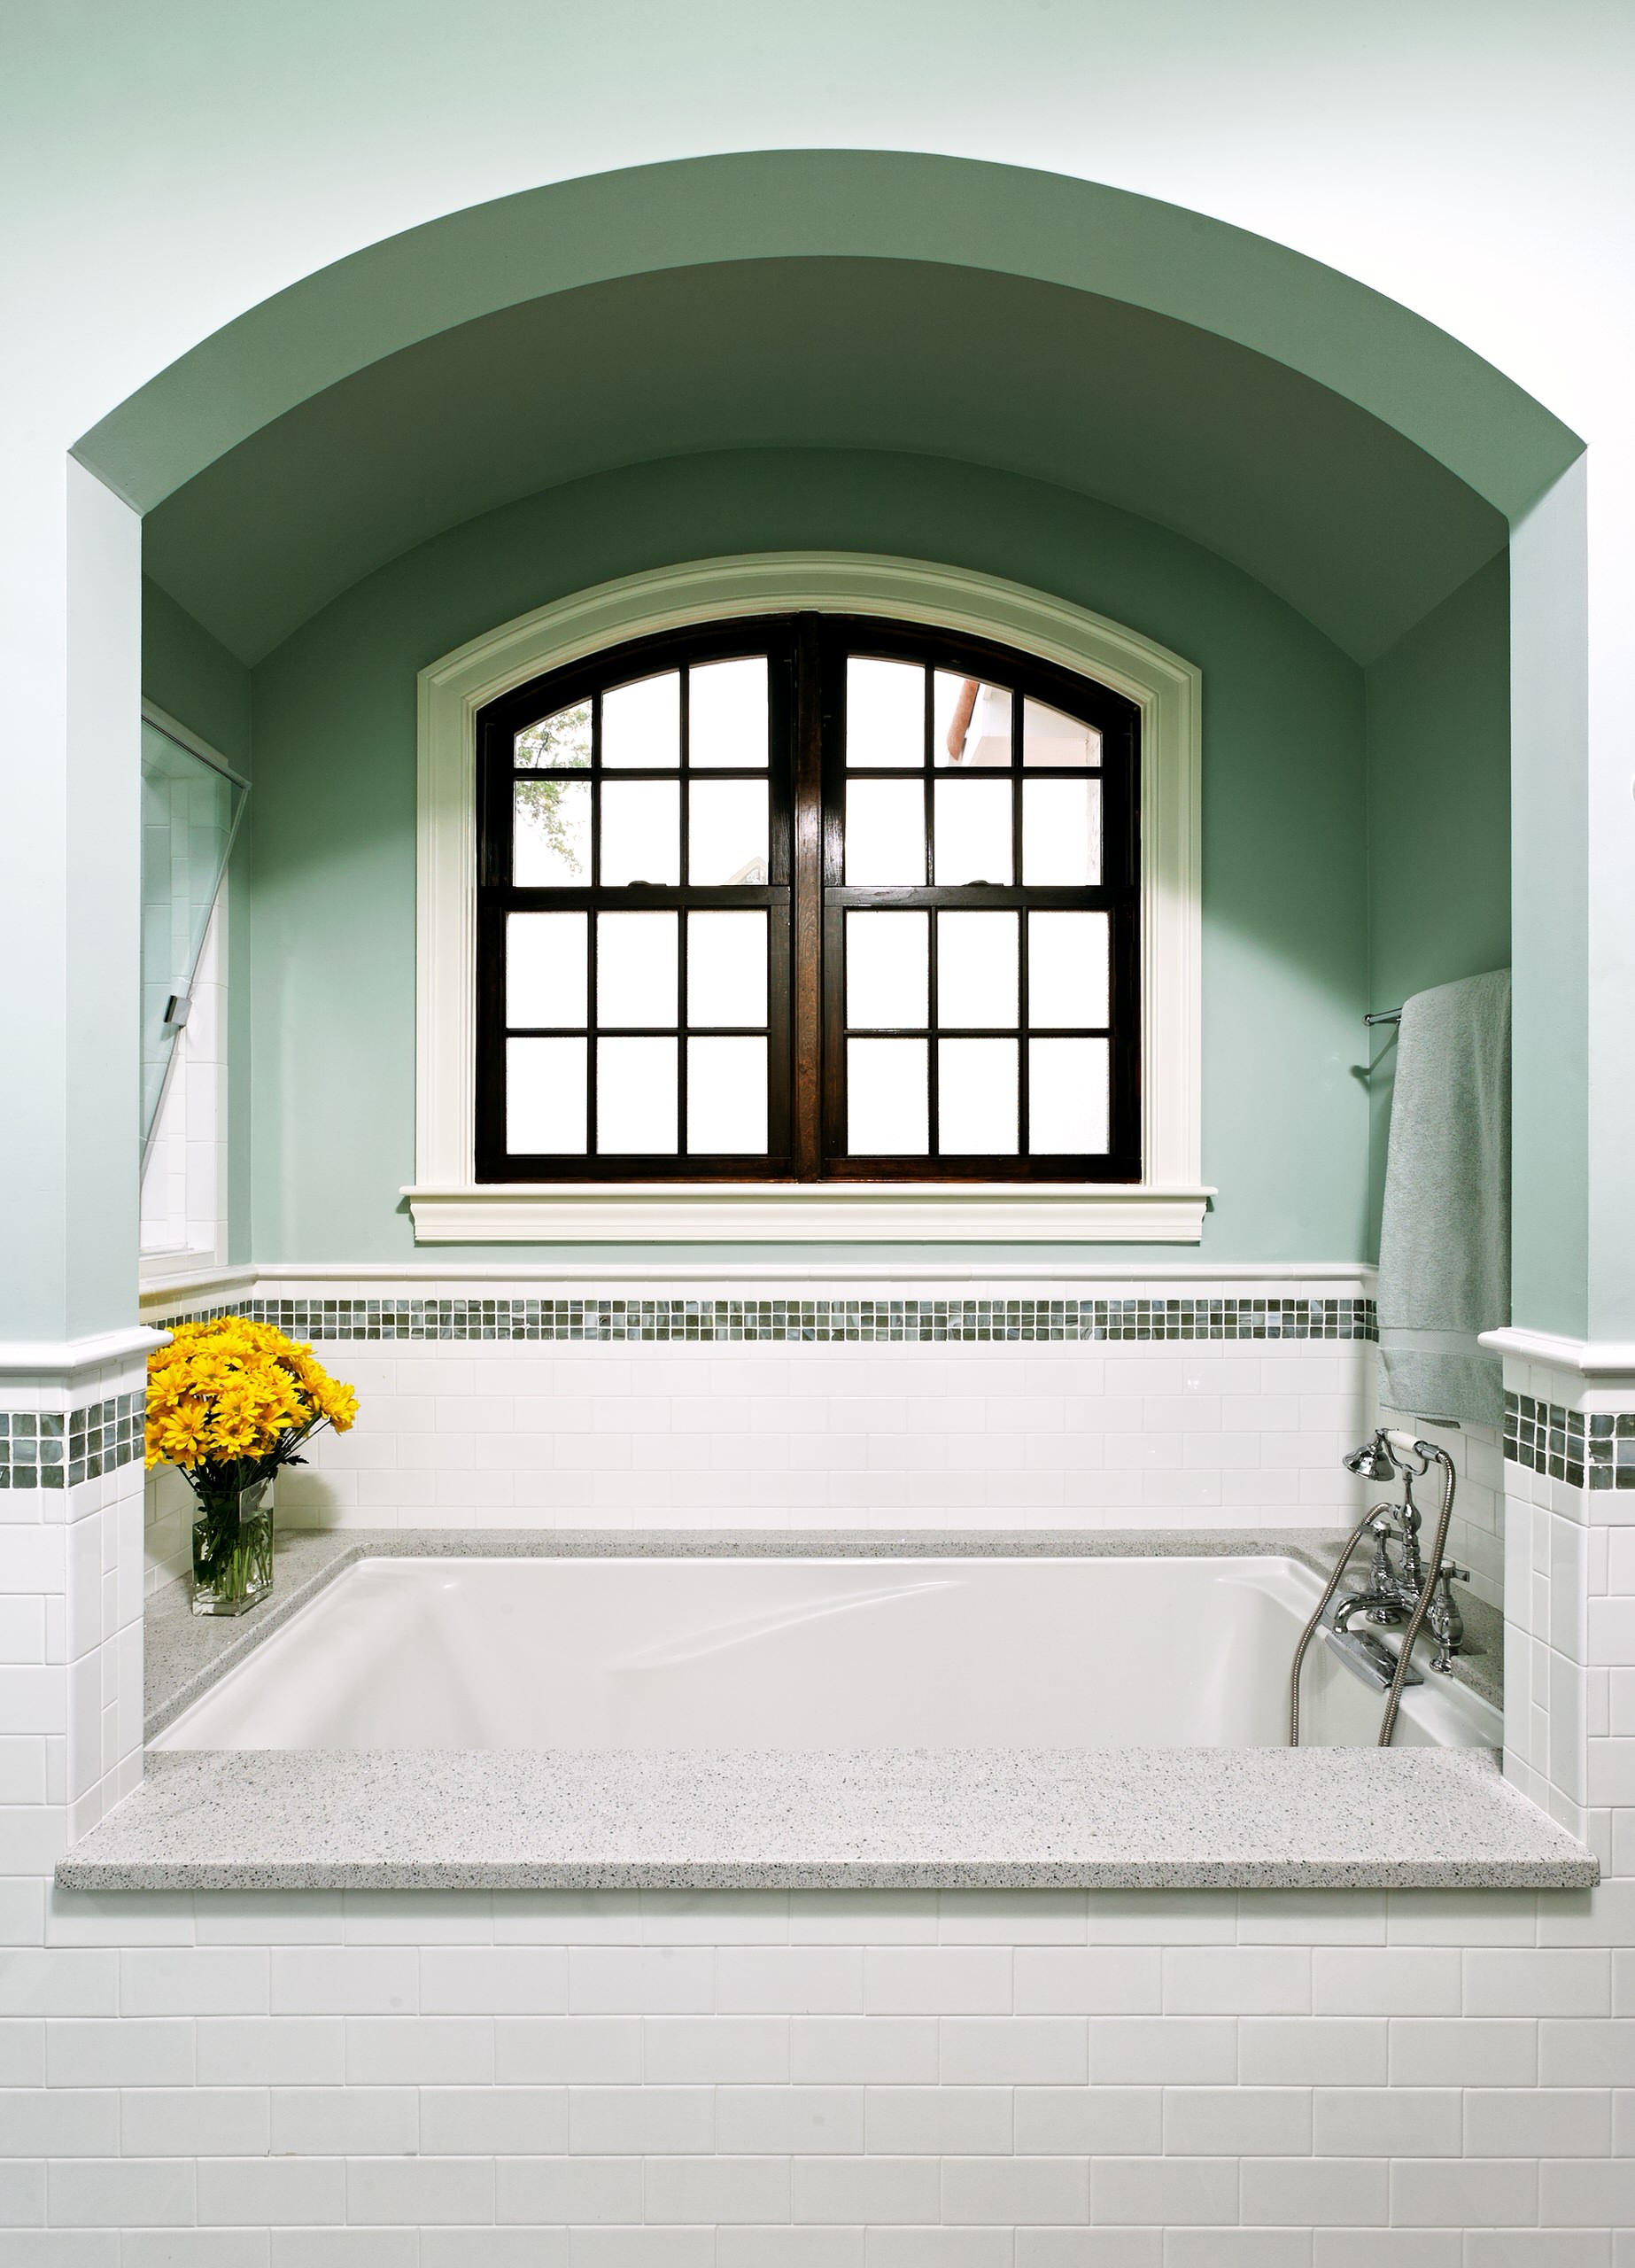 Traditional Spanish Colonial - Master Bathtub Alcove